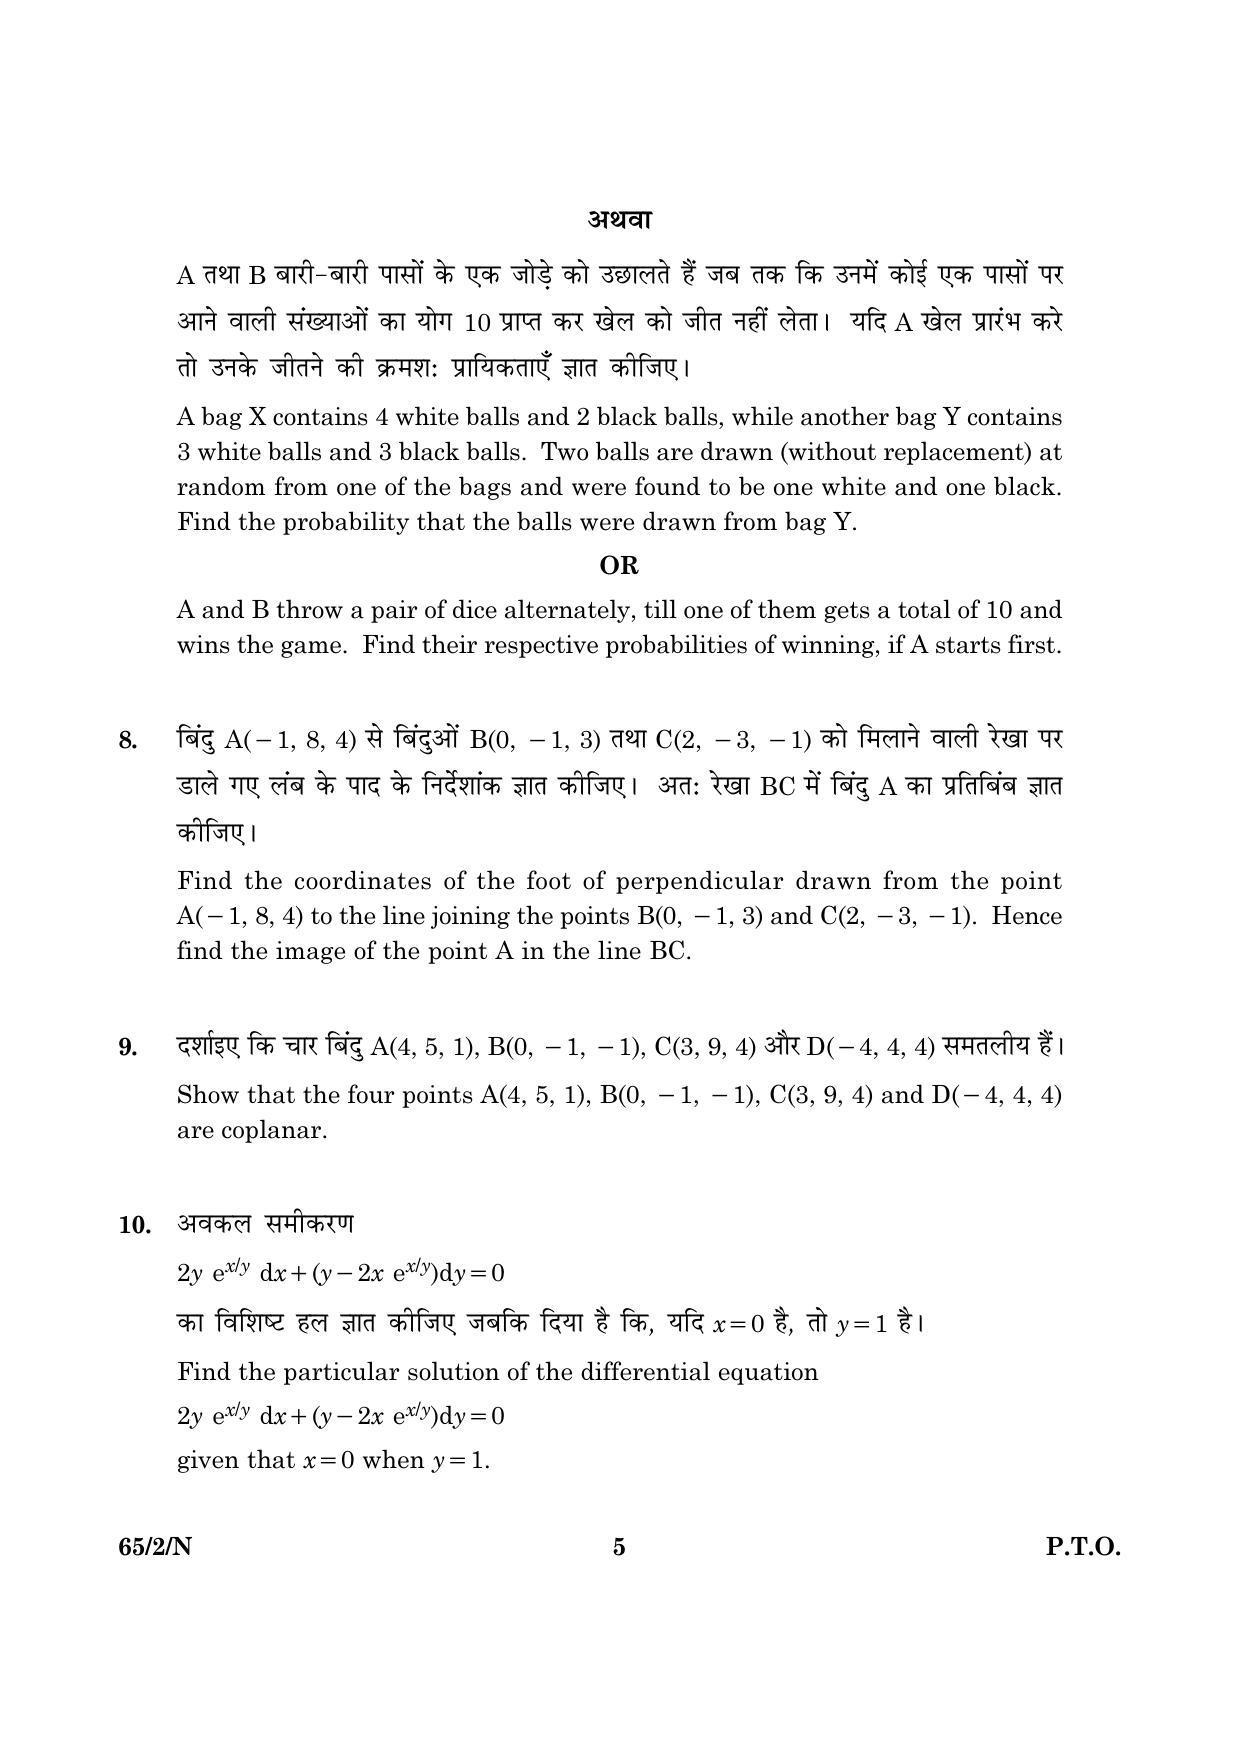 CBSE Class 12 065 Set 2 N Mathematics 2016 Question Paper - Page 5